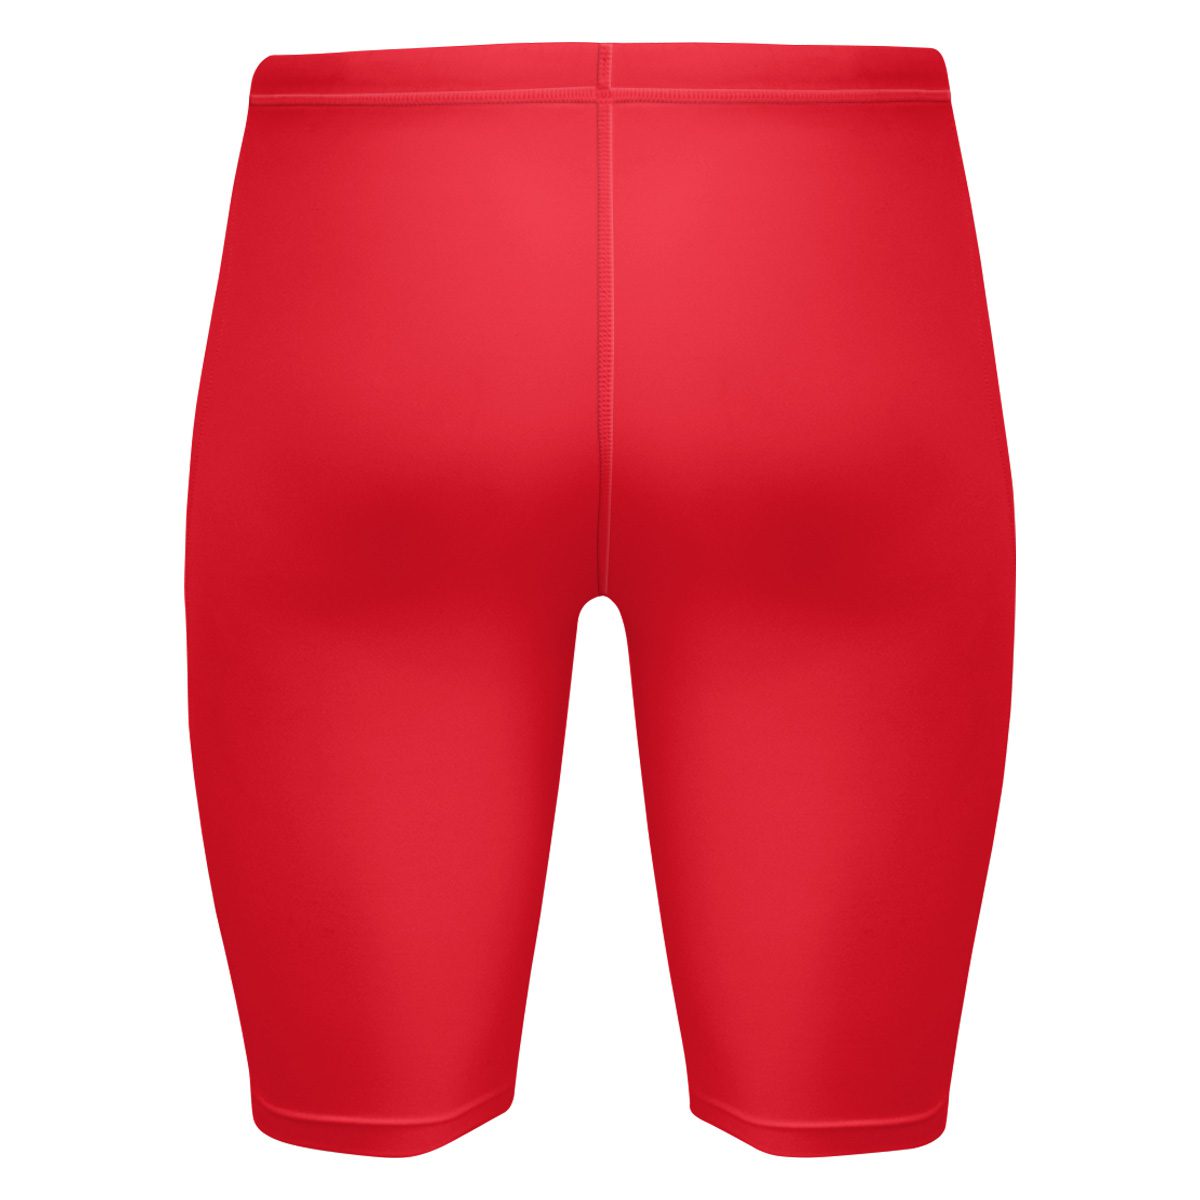 Mens Compression Shorts - Red - Blackchrome